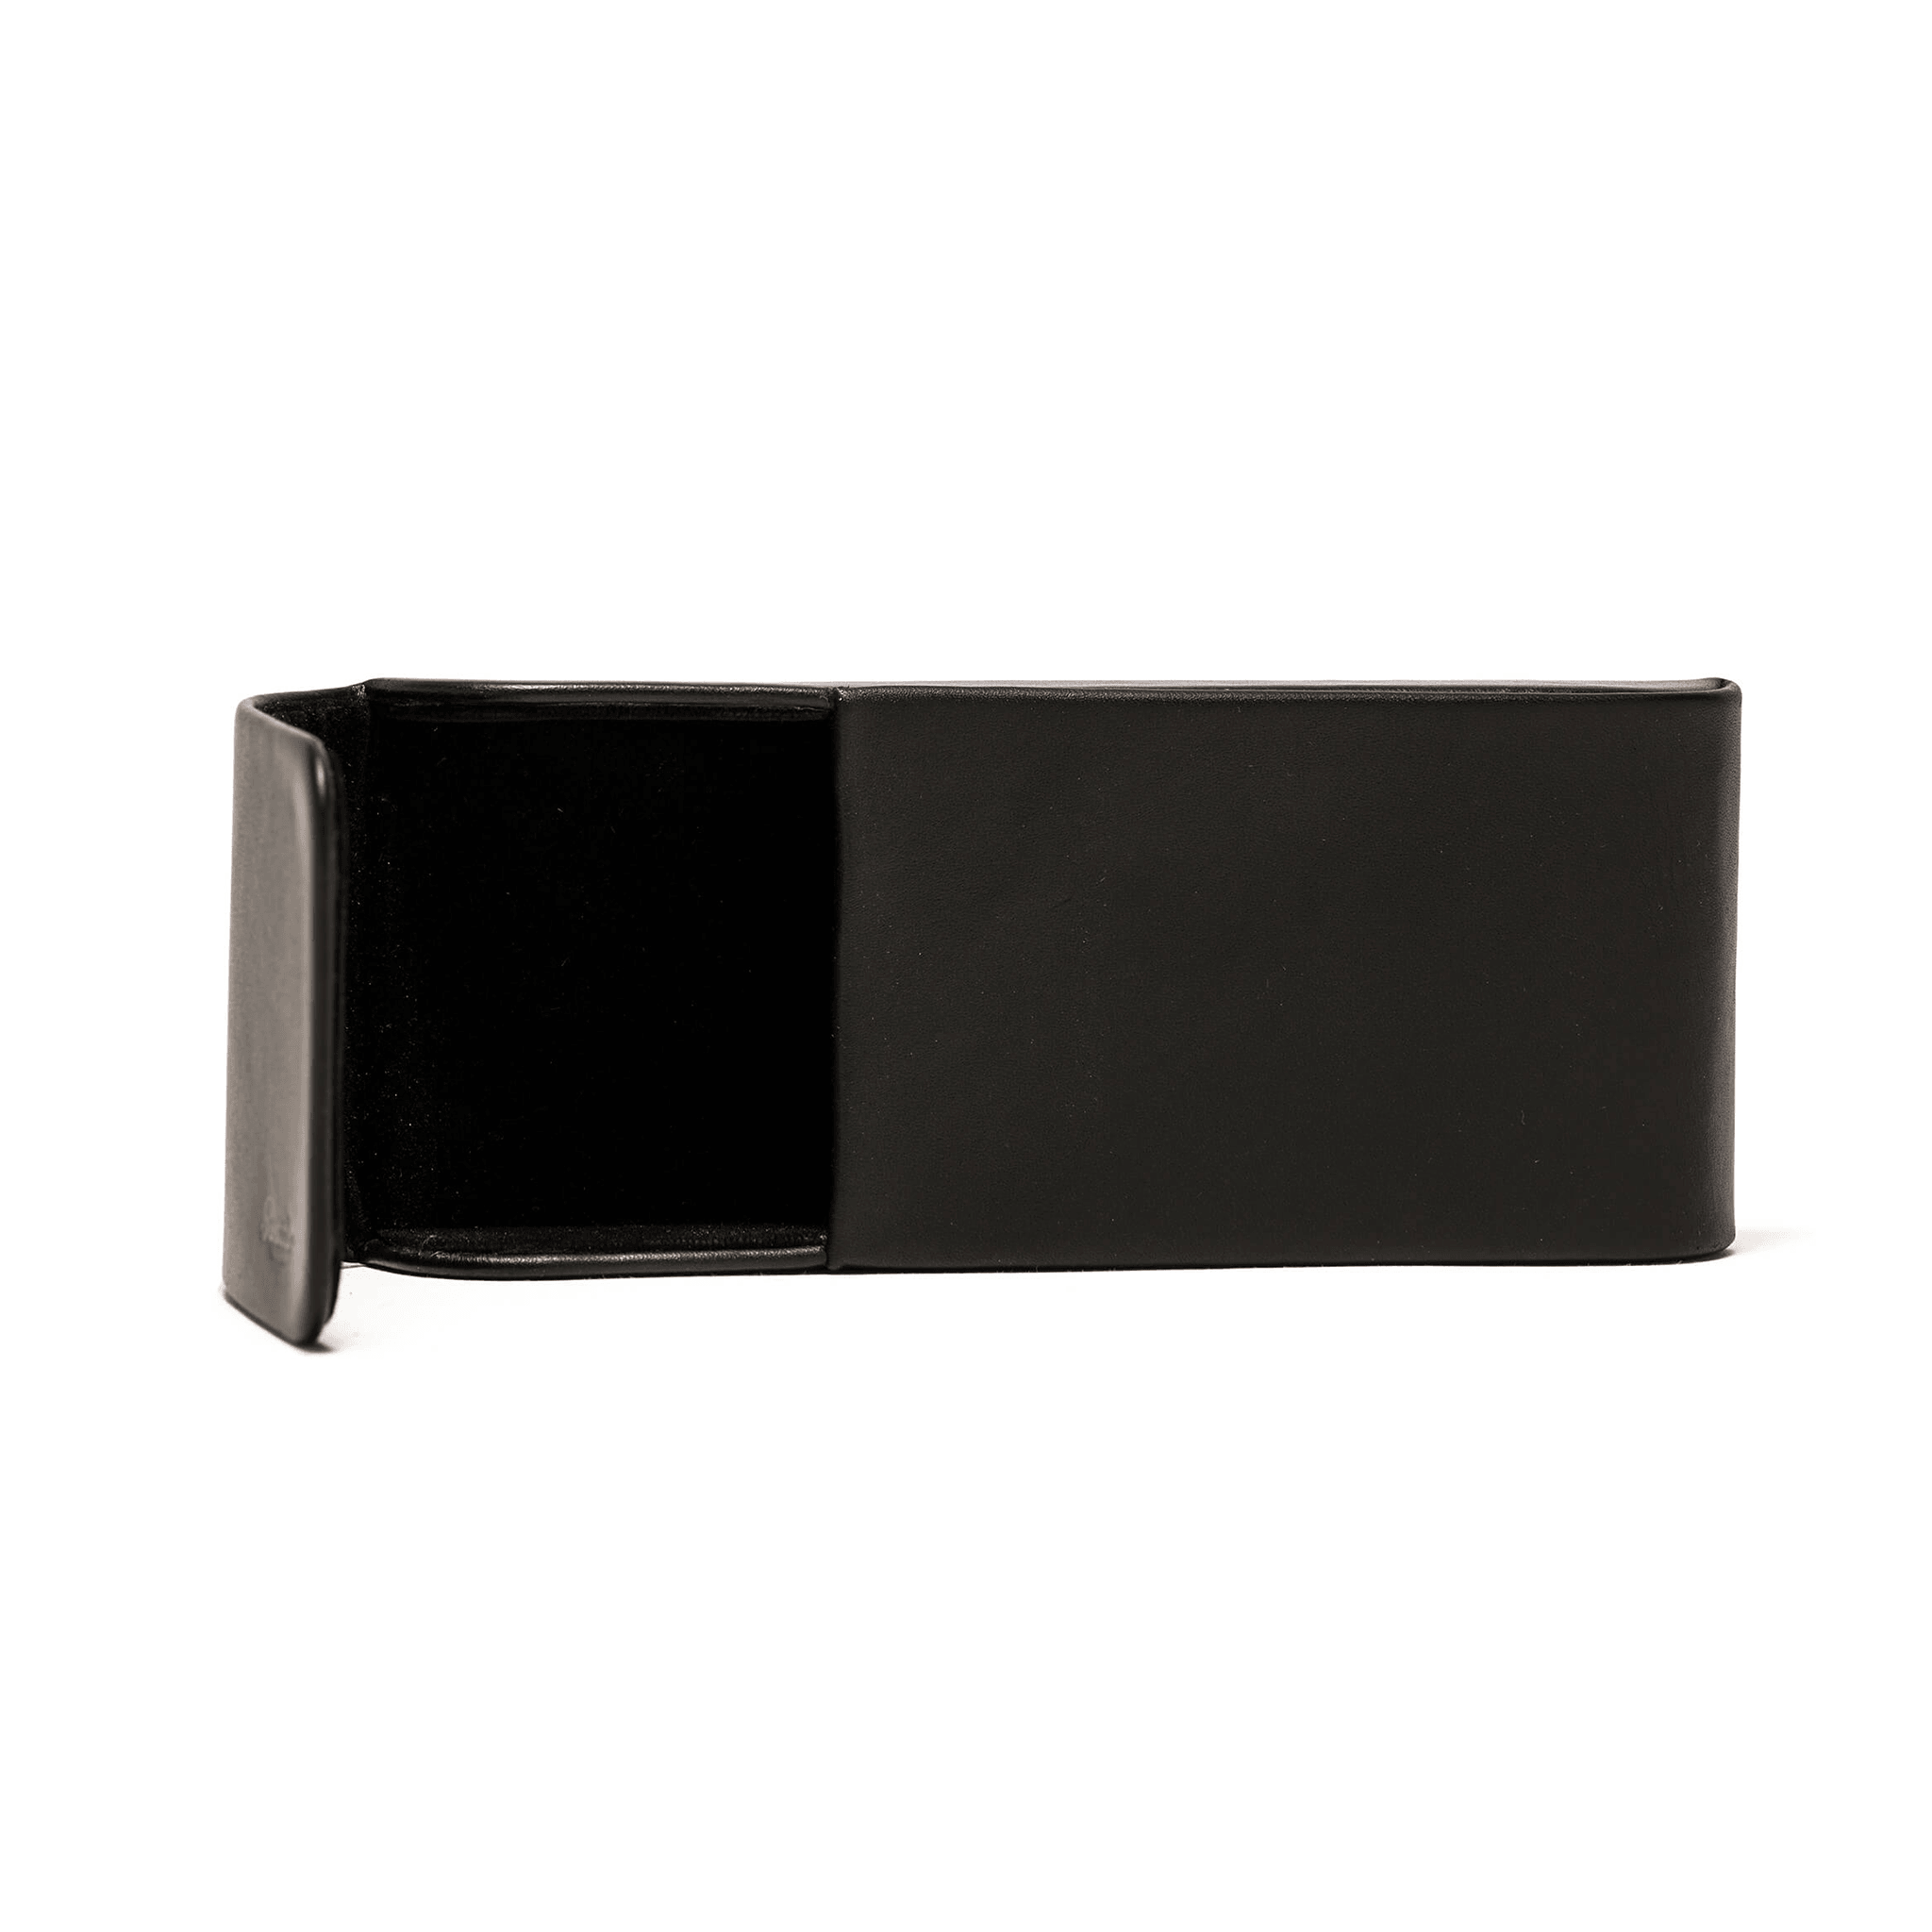 Pineider 3 Pen Leather Case Black - Laywine's